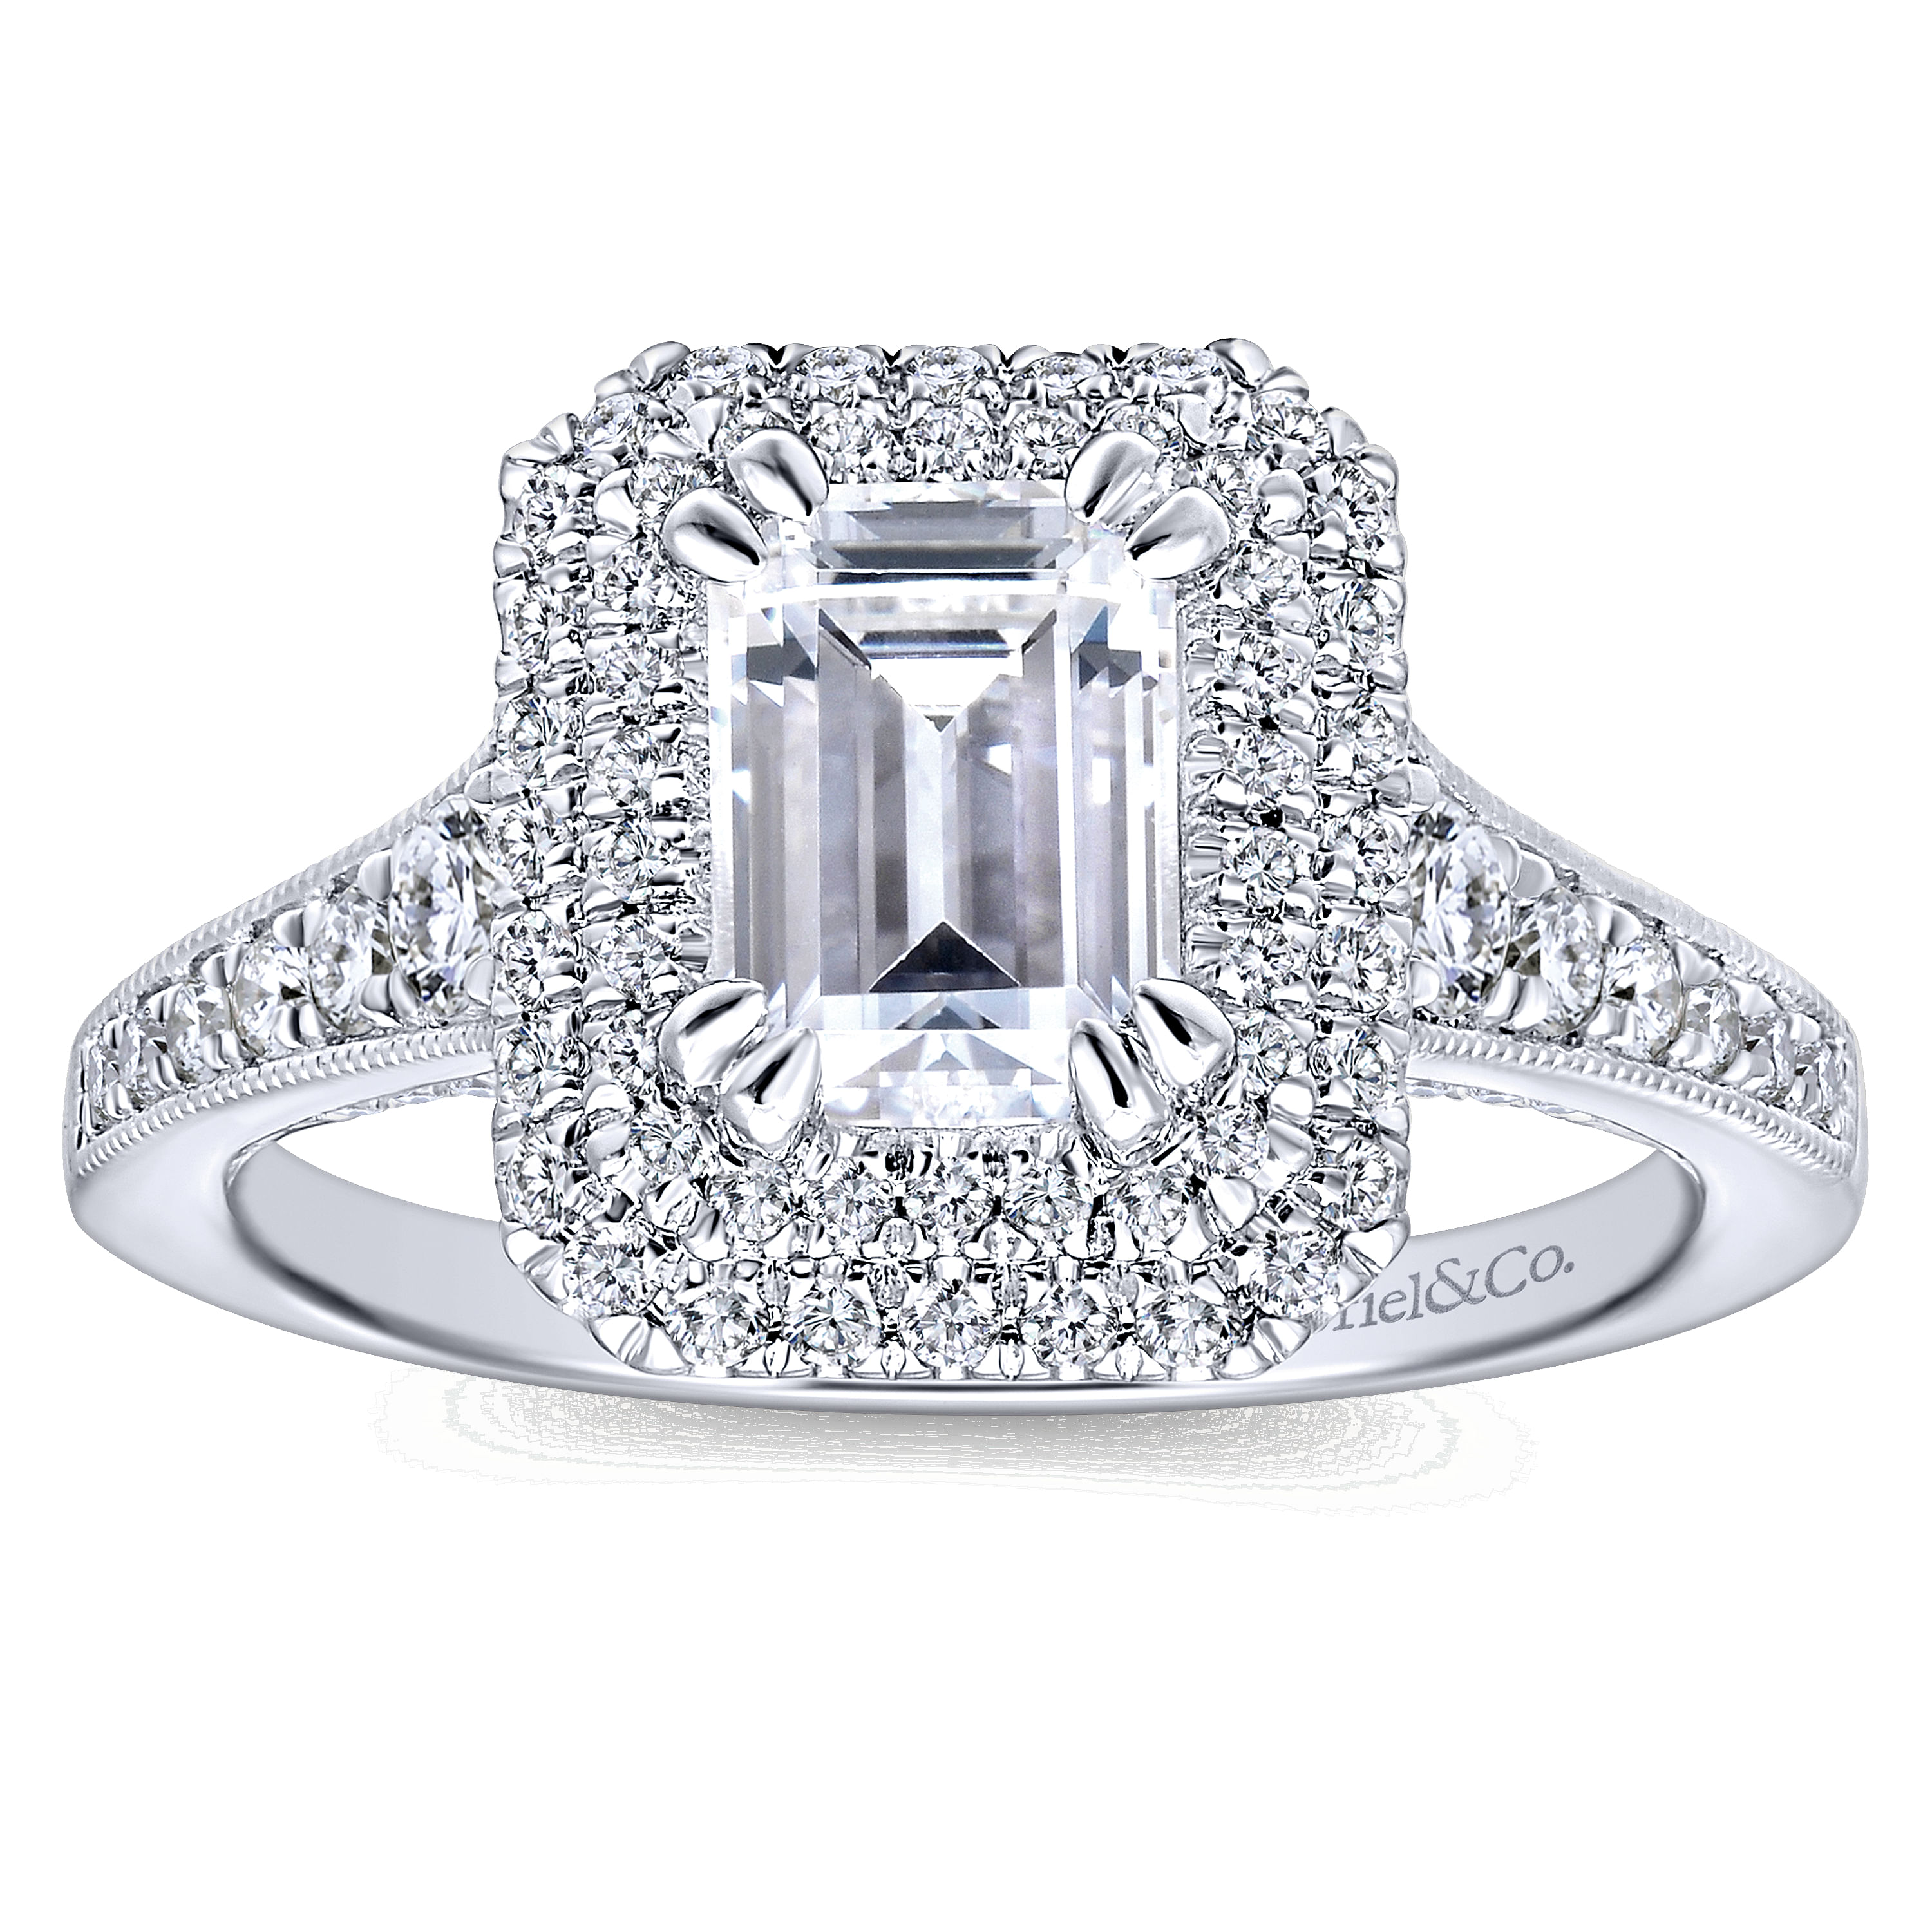 14K White Gold Double Halo Emerald Cut Diamond Engagement Ring